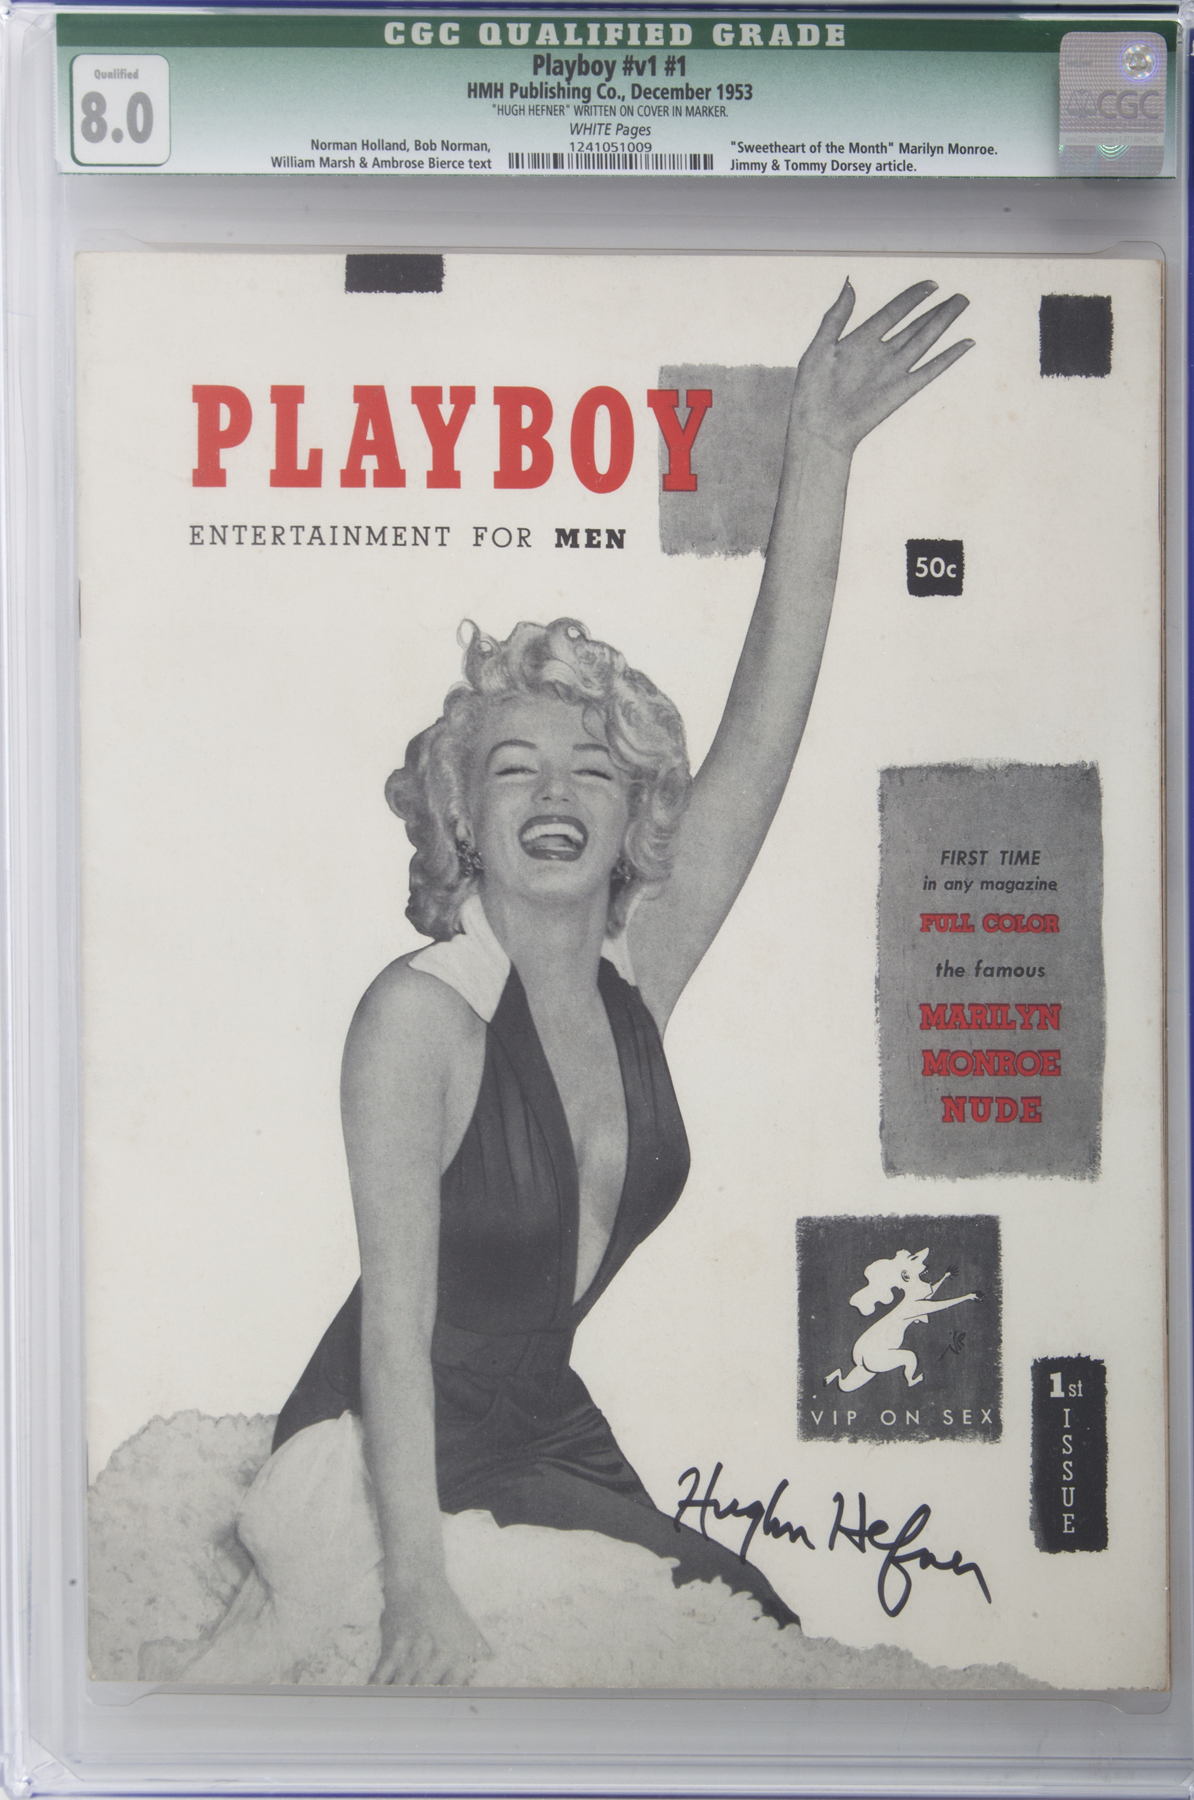 Playboy magazine signed by Hugh Hefner